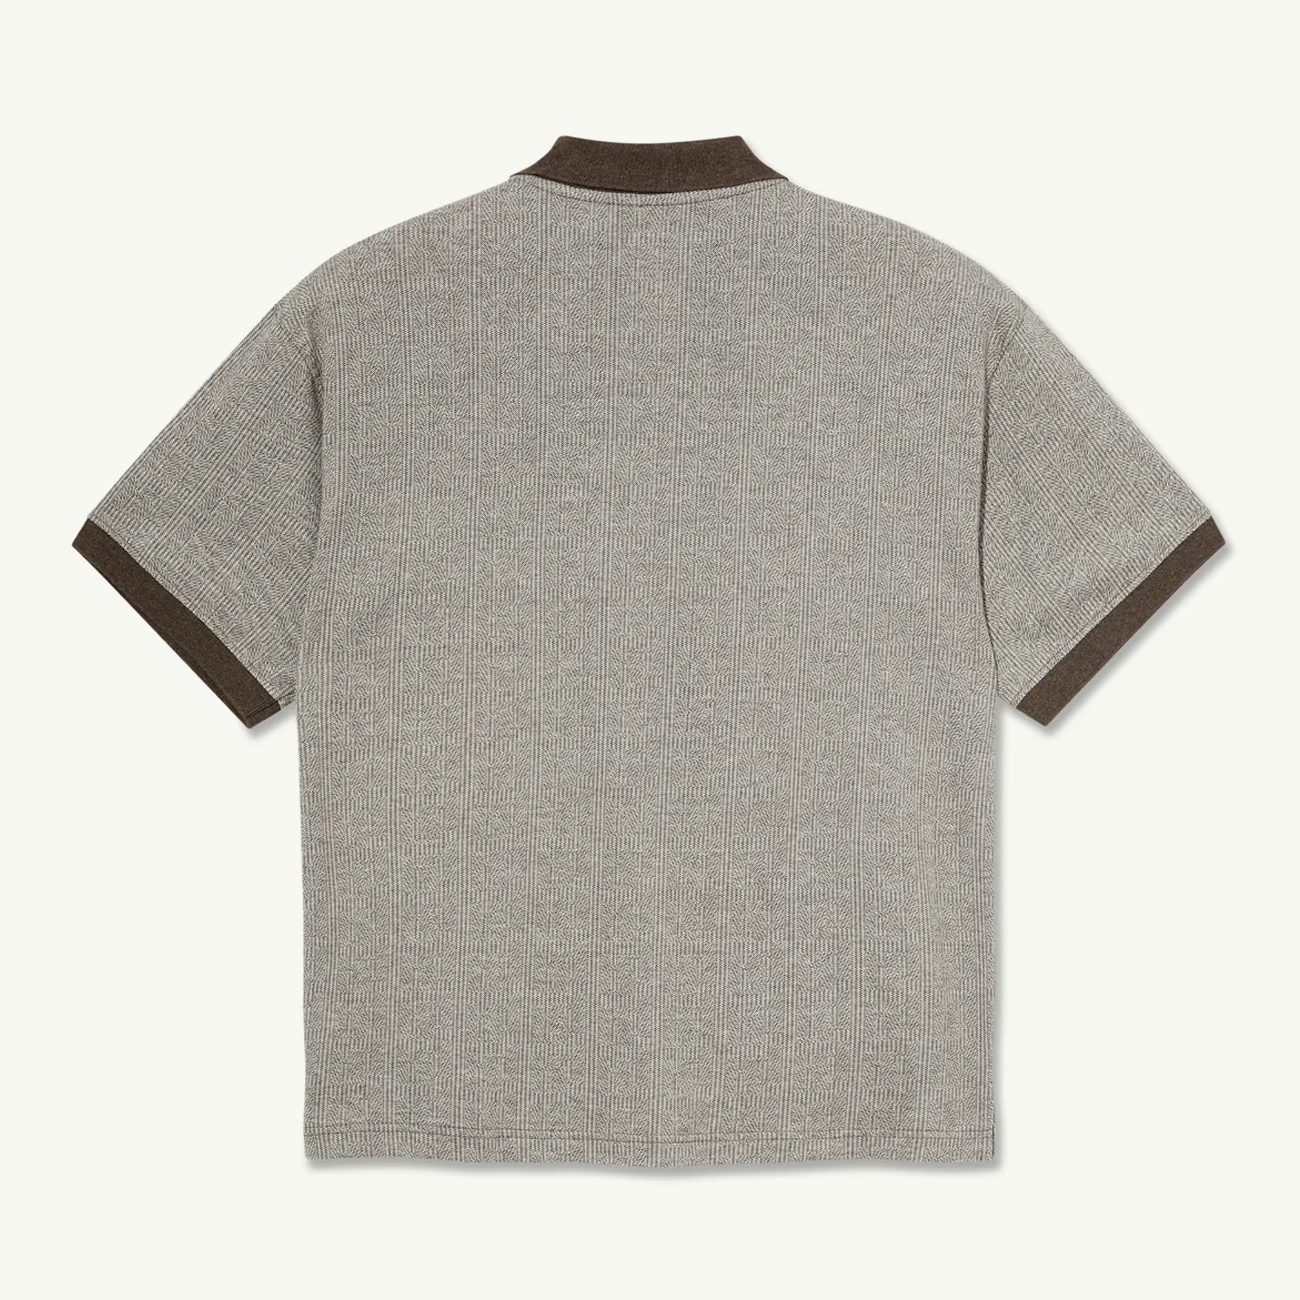 Surf Polo Shirt - Illusion/Brown